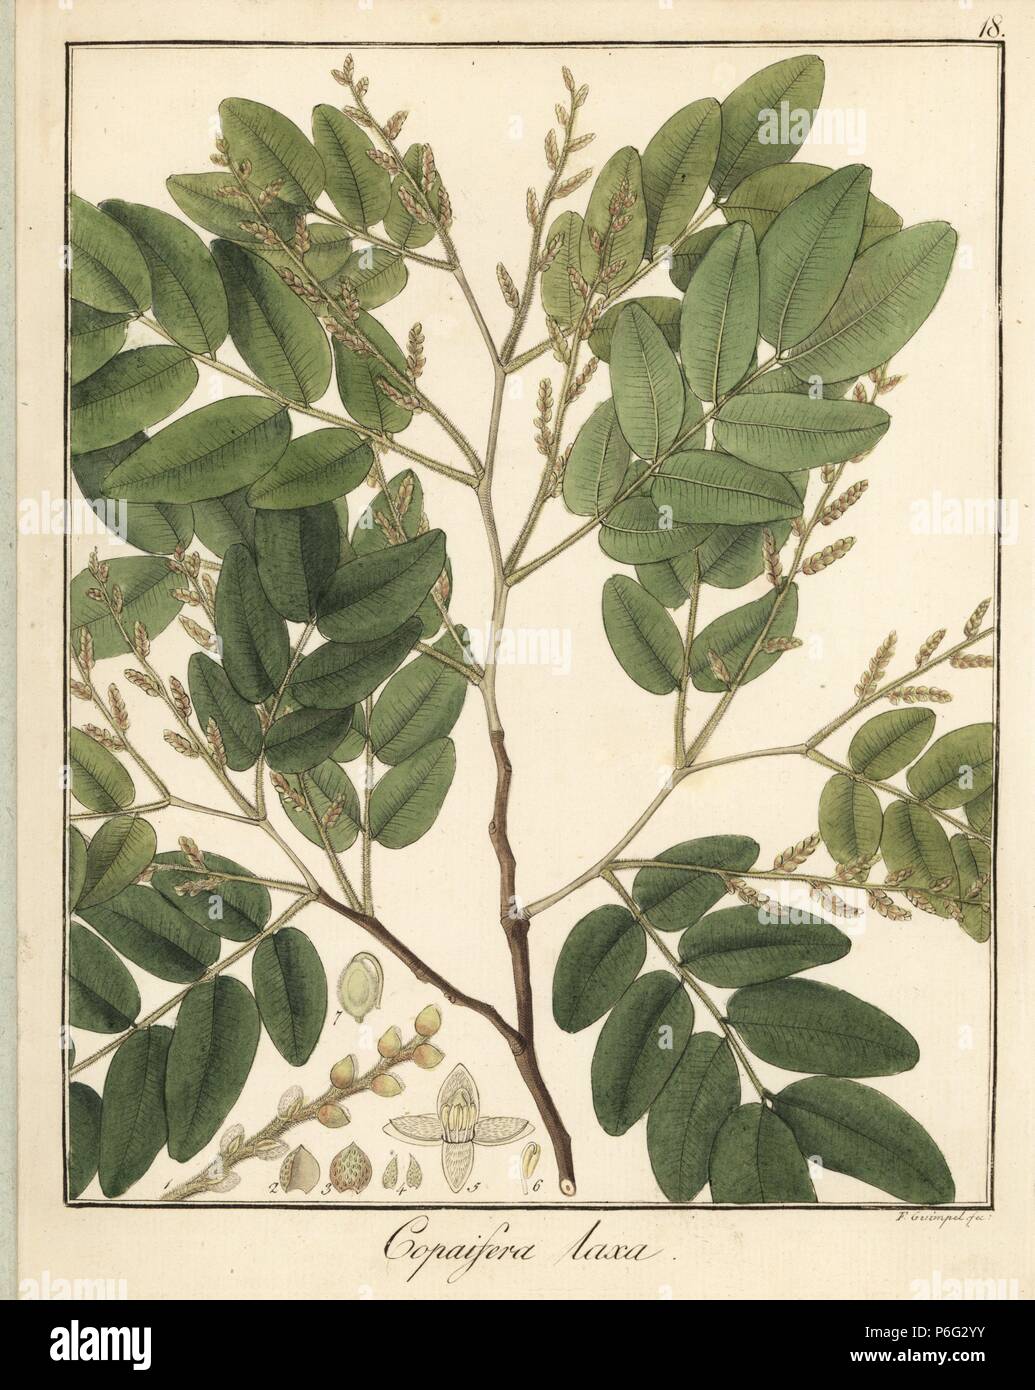 Diesel or kerosene tree, Copaifera langsdorffii var. laxa. Handcoloured copperplate engraving by F. Guimpel from Dr. Friedrich Gottlob Hayne's Medical Botany, Berlin, 1822. Hayne (1763-1832) was a German botanist, apothecary and professor of pharmaceutical botany at Berlin University. Stock Photo